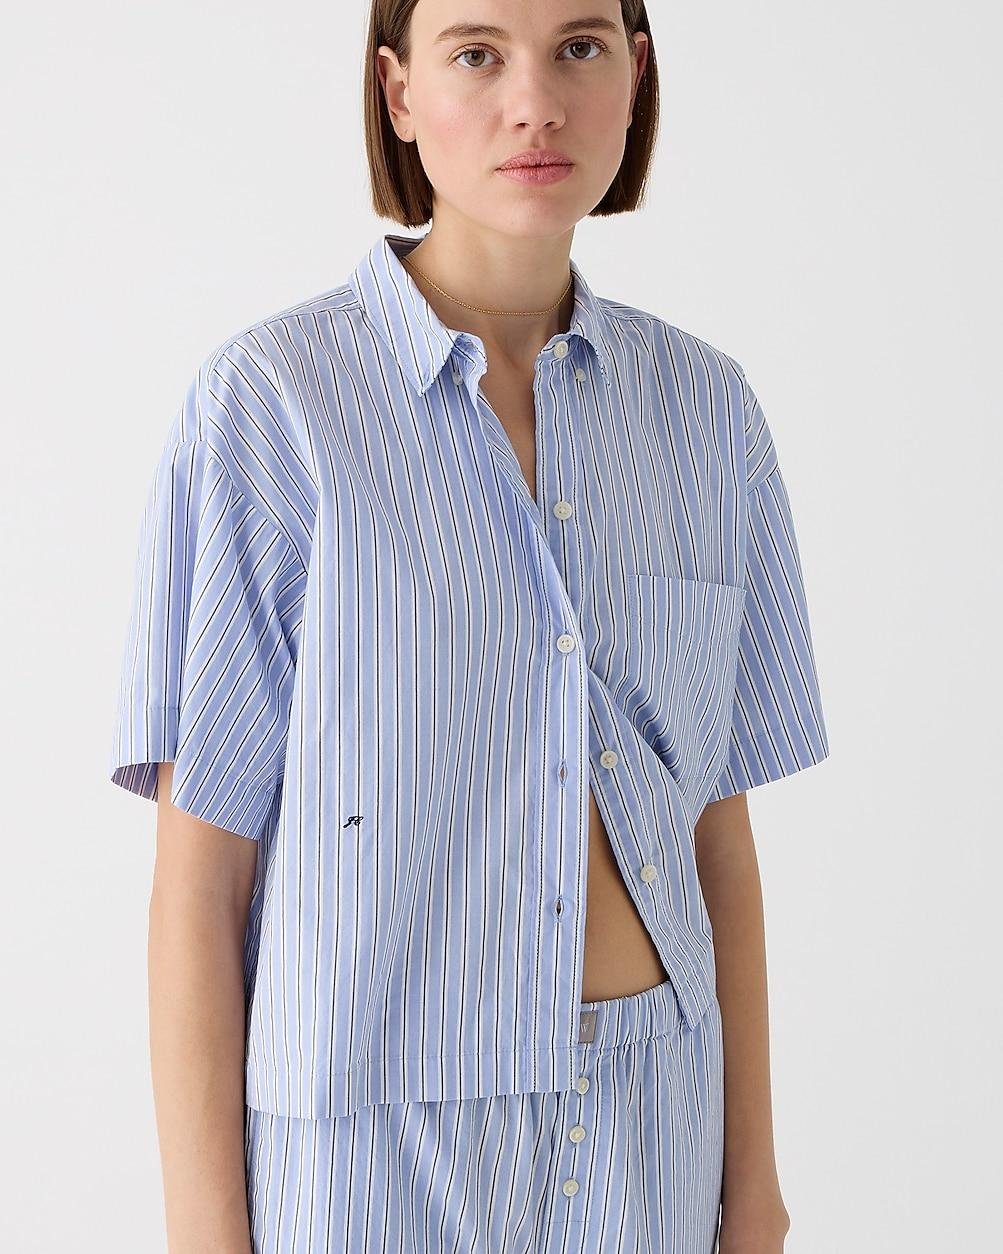 Cropped short-sleeve pajama pant set in stripe by J.CREW